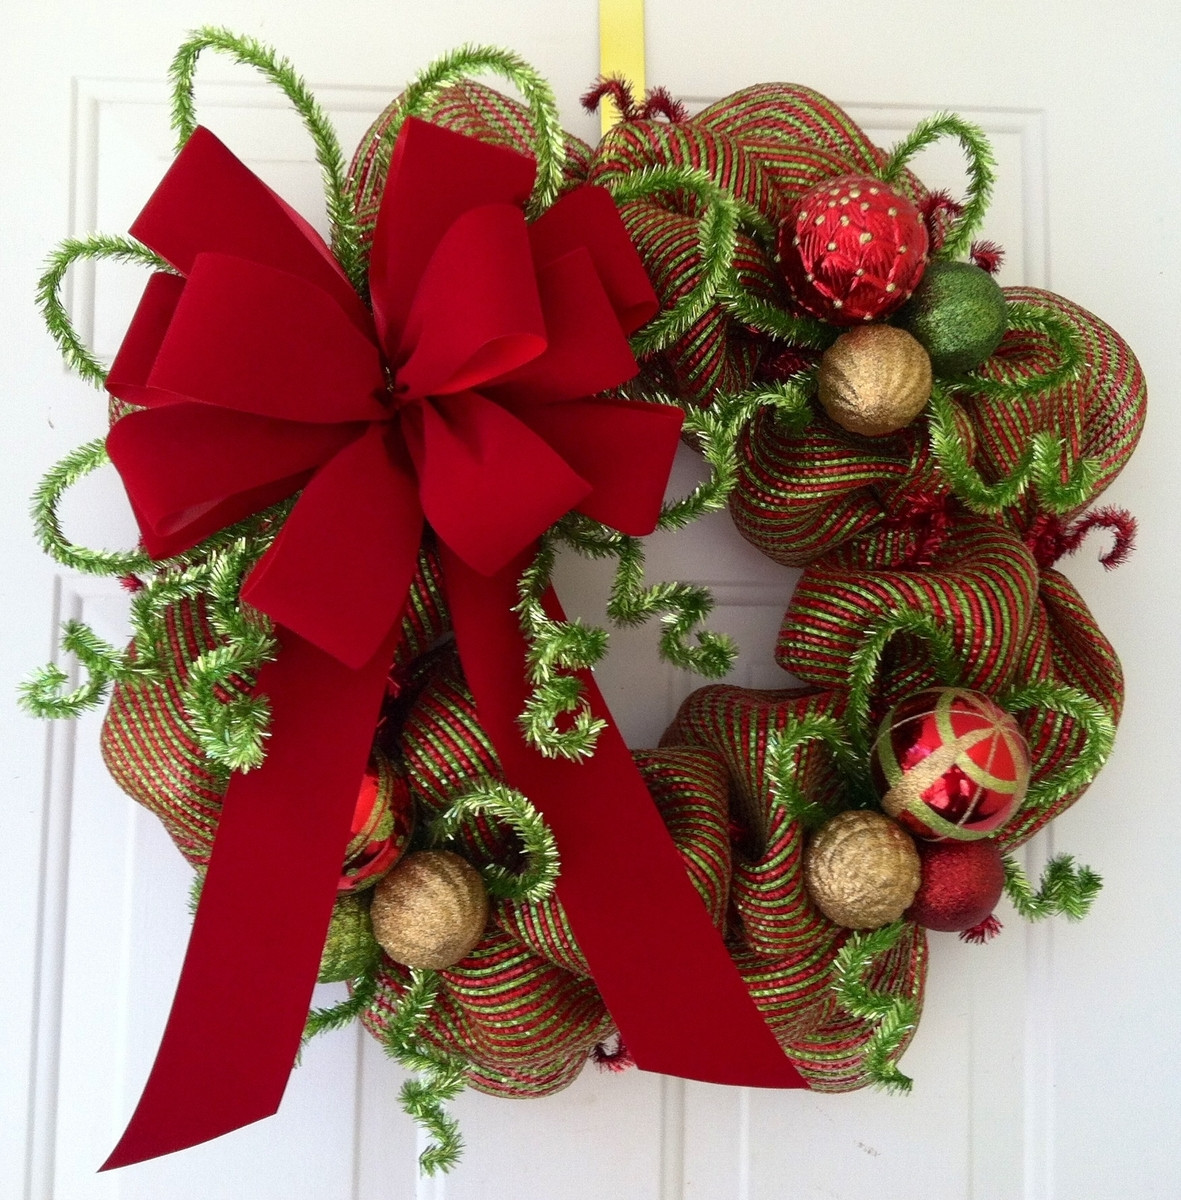 DIY Christmas Wreaths
 Make A Diy Christmas Wreaths Yourself To Celebrate The